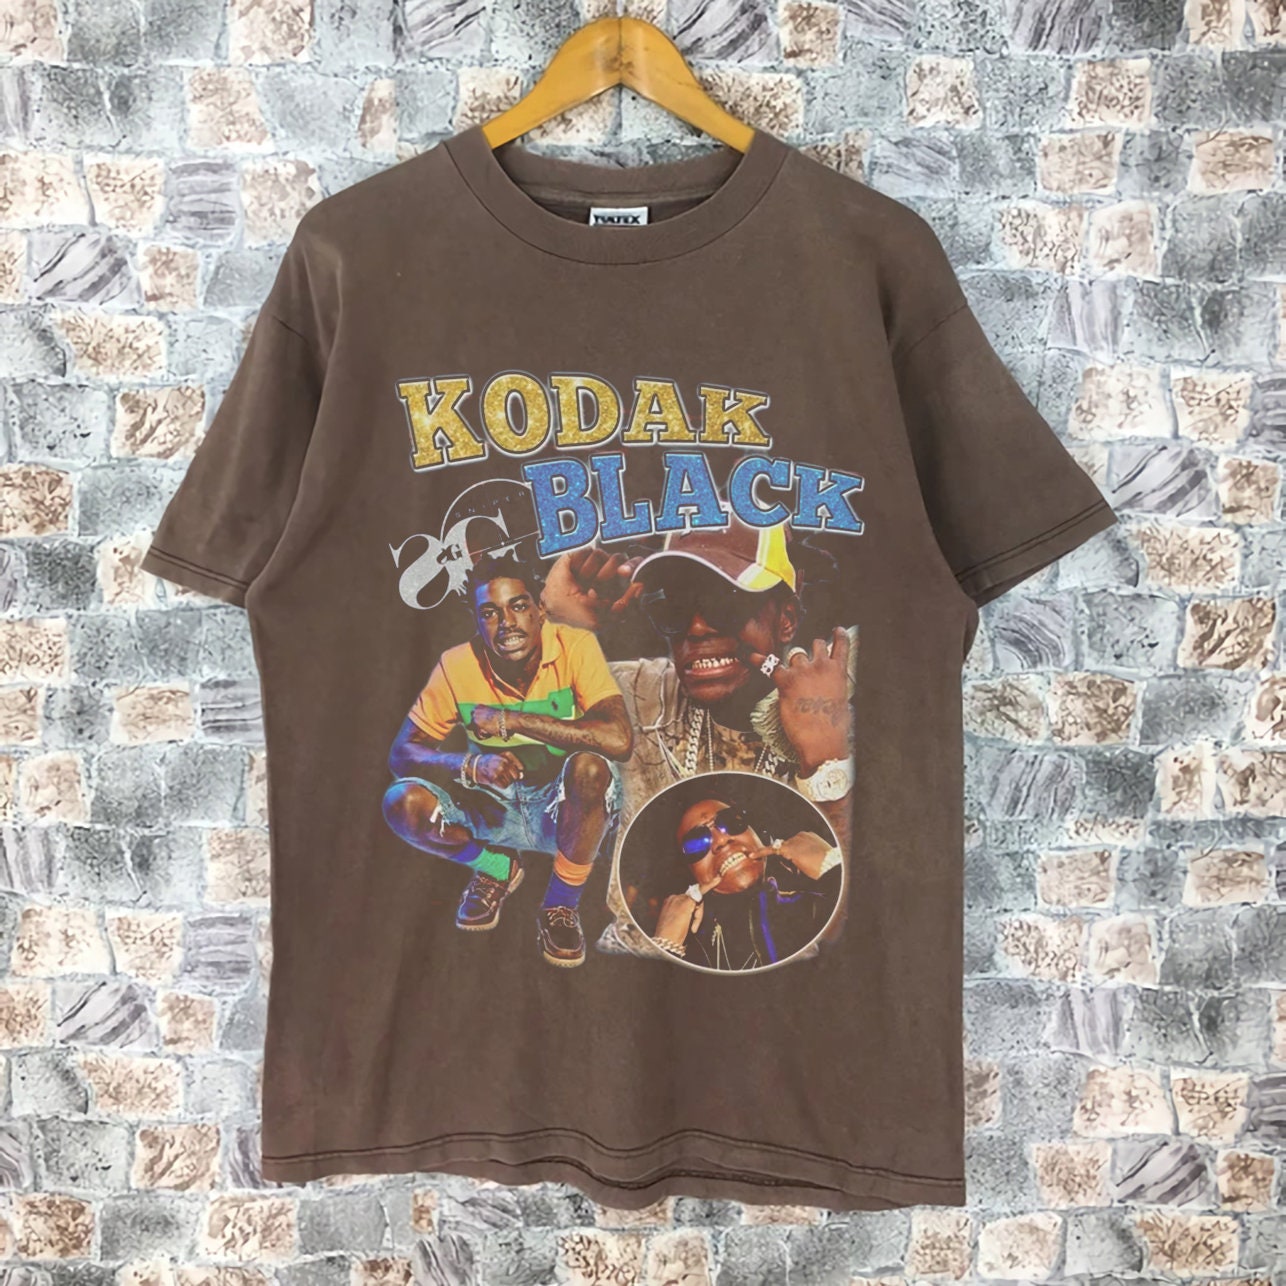 Discover kodak black shirt vintage 90s style shirt